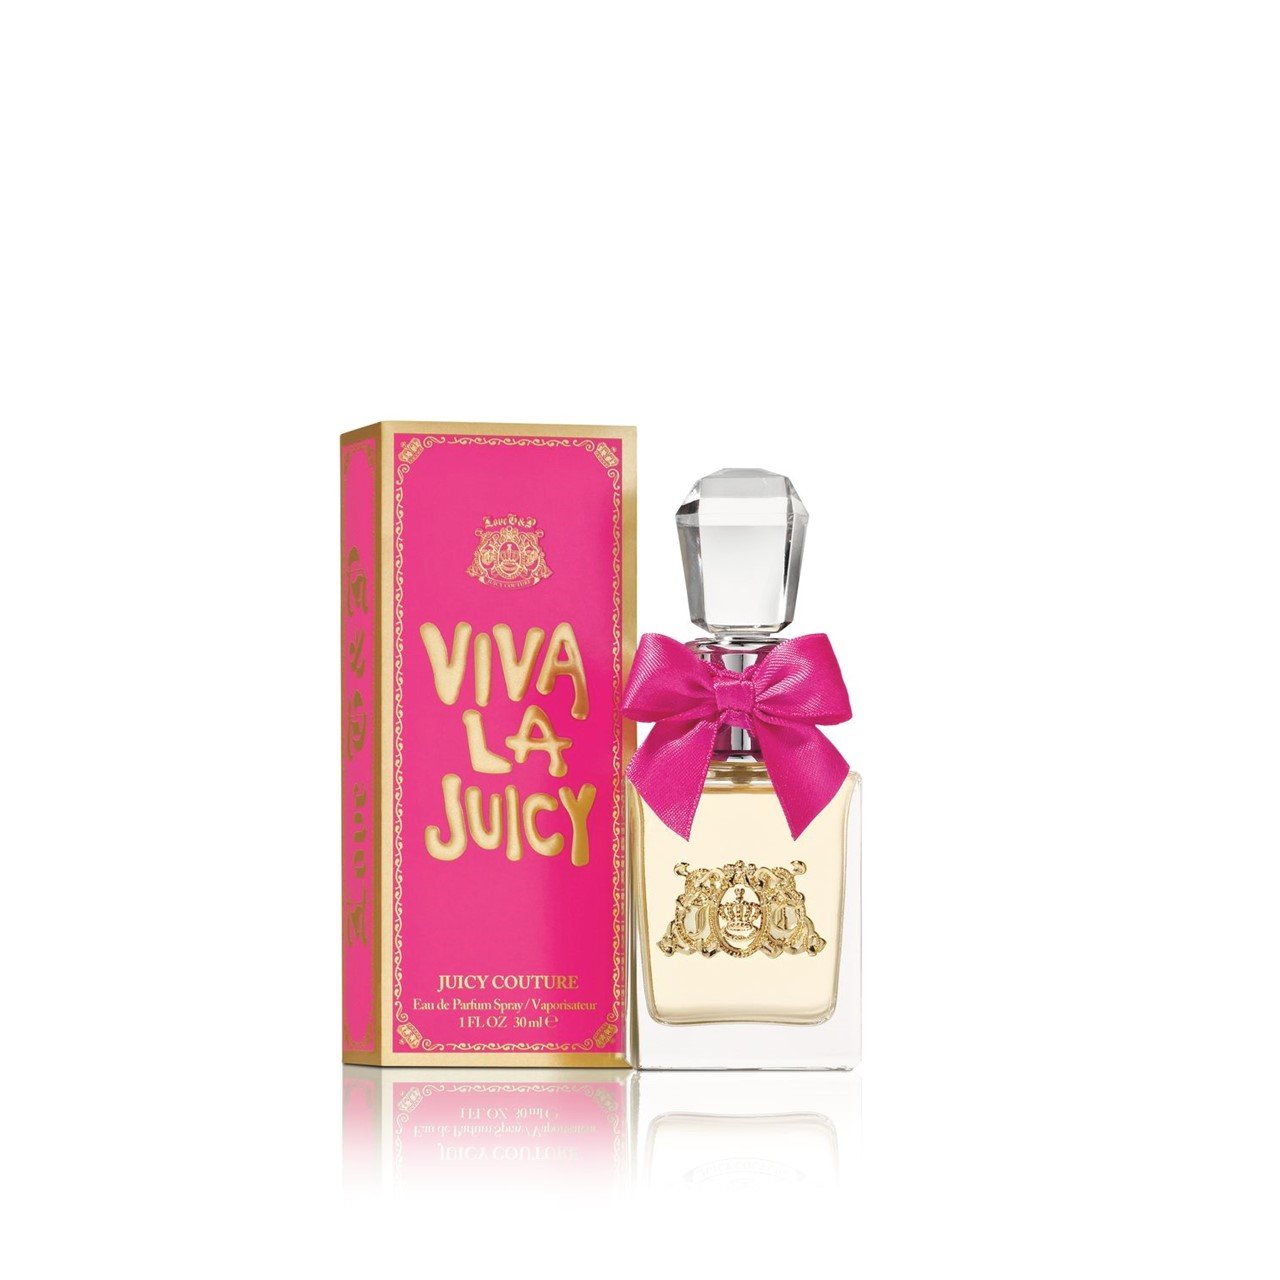 Juicy Couture Viva La Juicy Eau de Parfum 30ml (1.0fl oz)